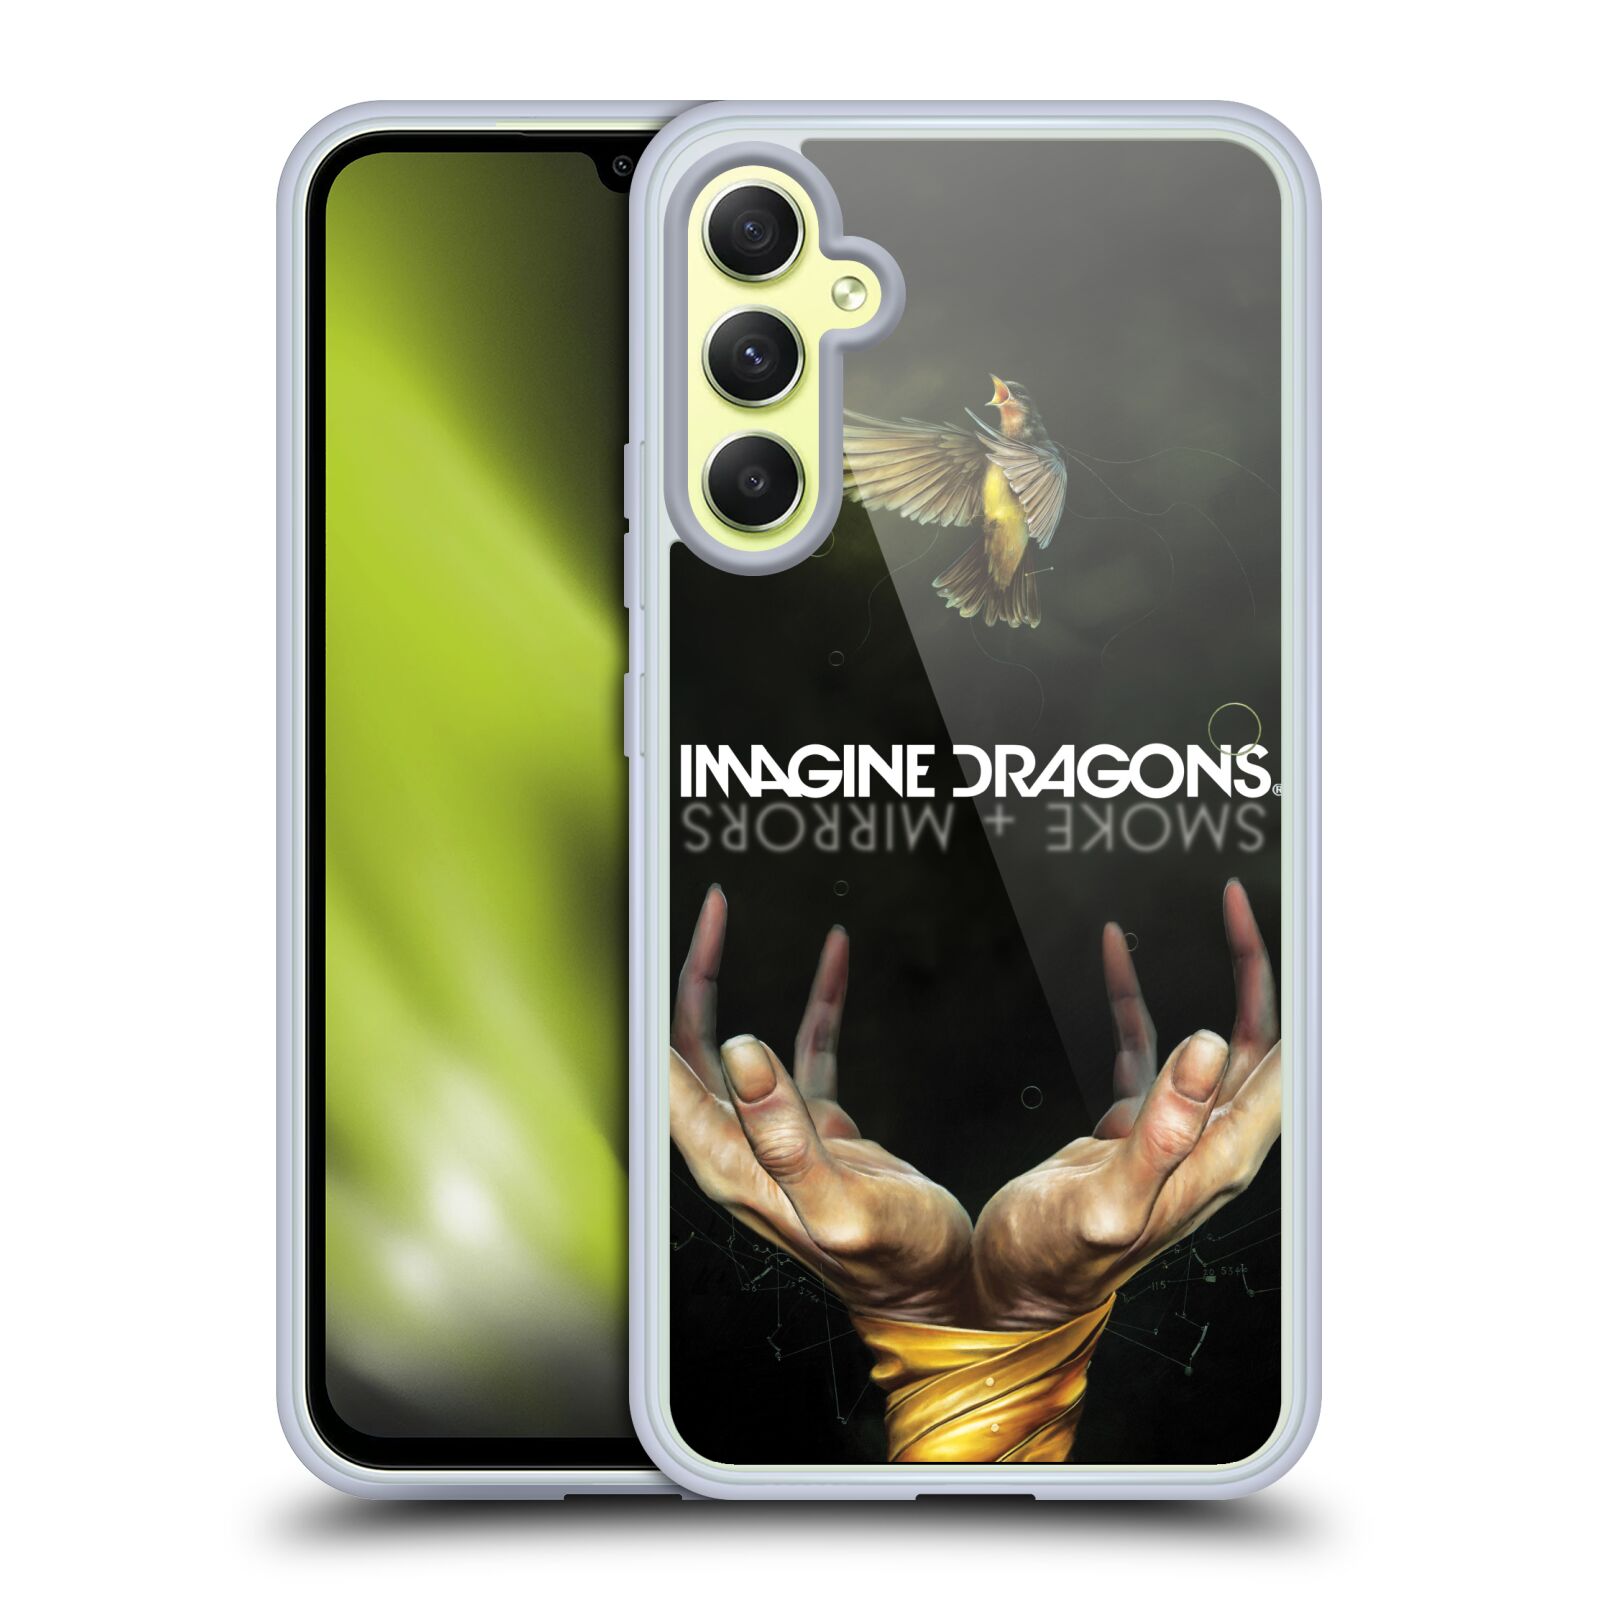 Silikonové pouzdro na mobil Samsung Galaxy A34 5G - Imagine Dragons - Smoke And Mirrors (Silikonový kryt, obal, pouzdro na mobilní telefon Samsung Galaxy A34 5G s licencovaným motivem Imagine Dragons - Smoke And Mirrors)